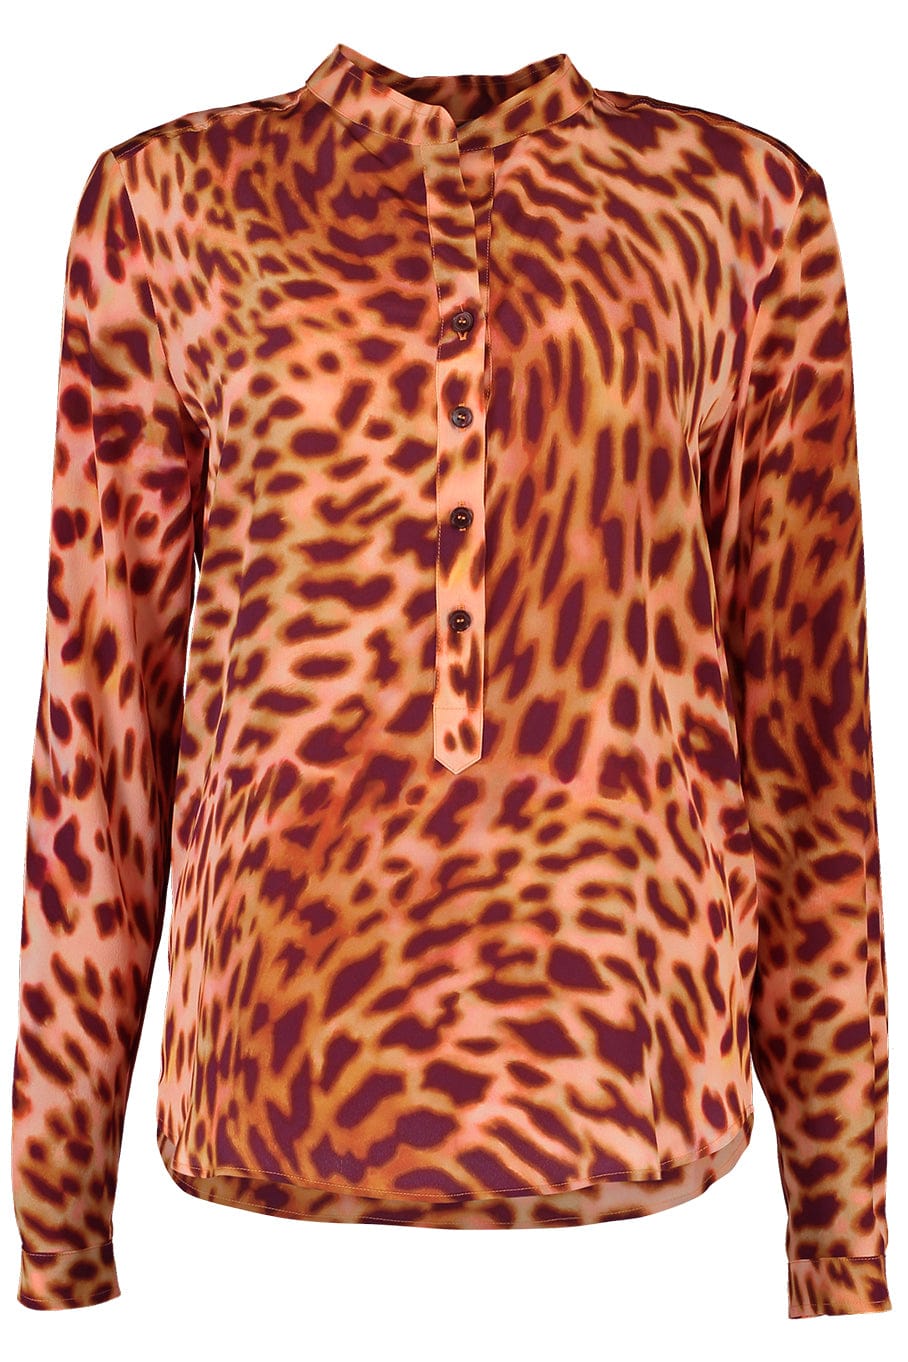 STELLA MCCARTNEY-Cheetah Print Shirt-